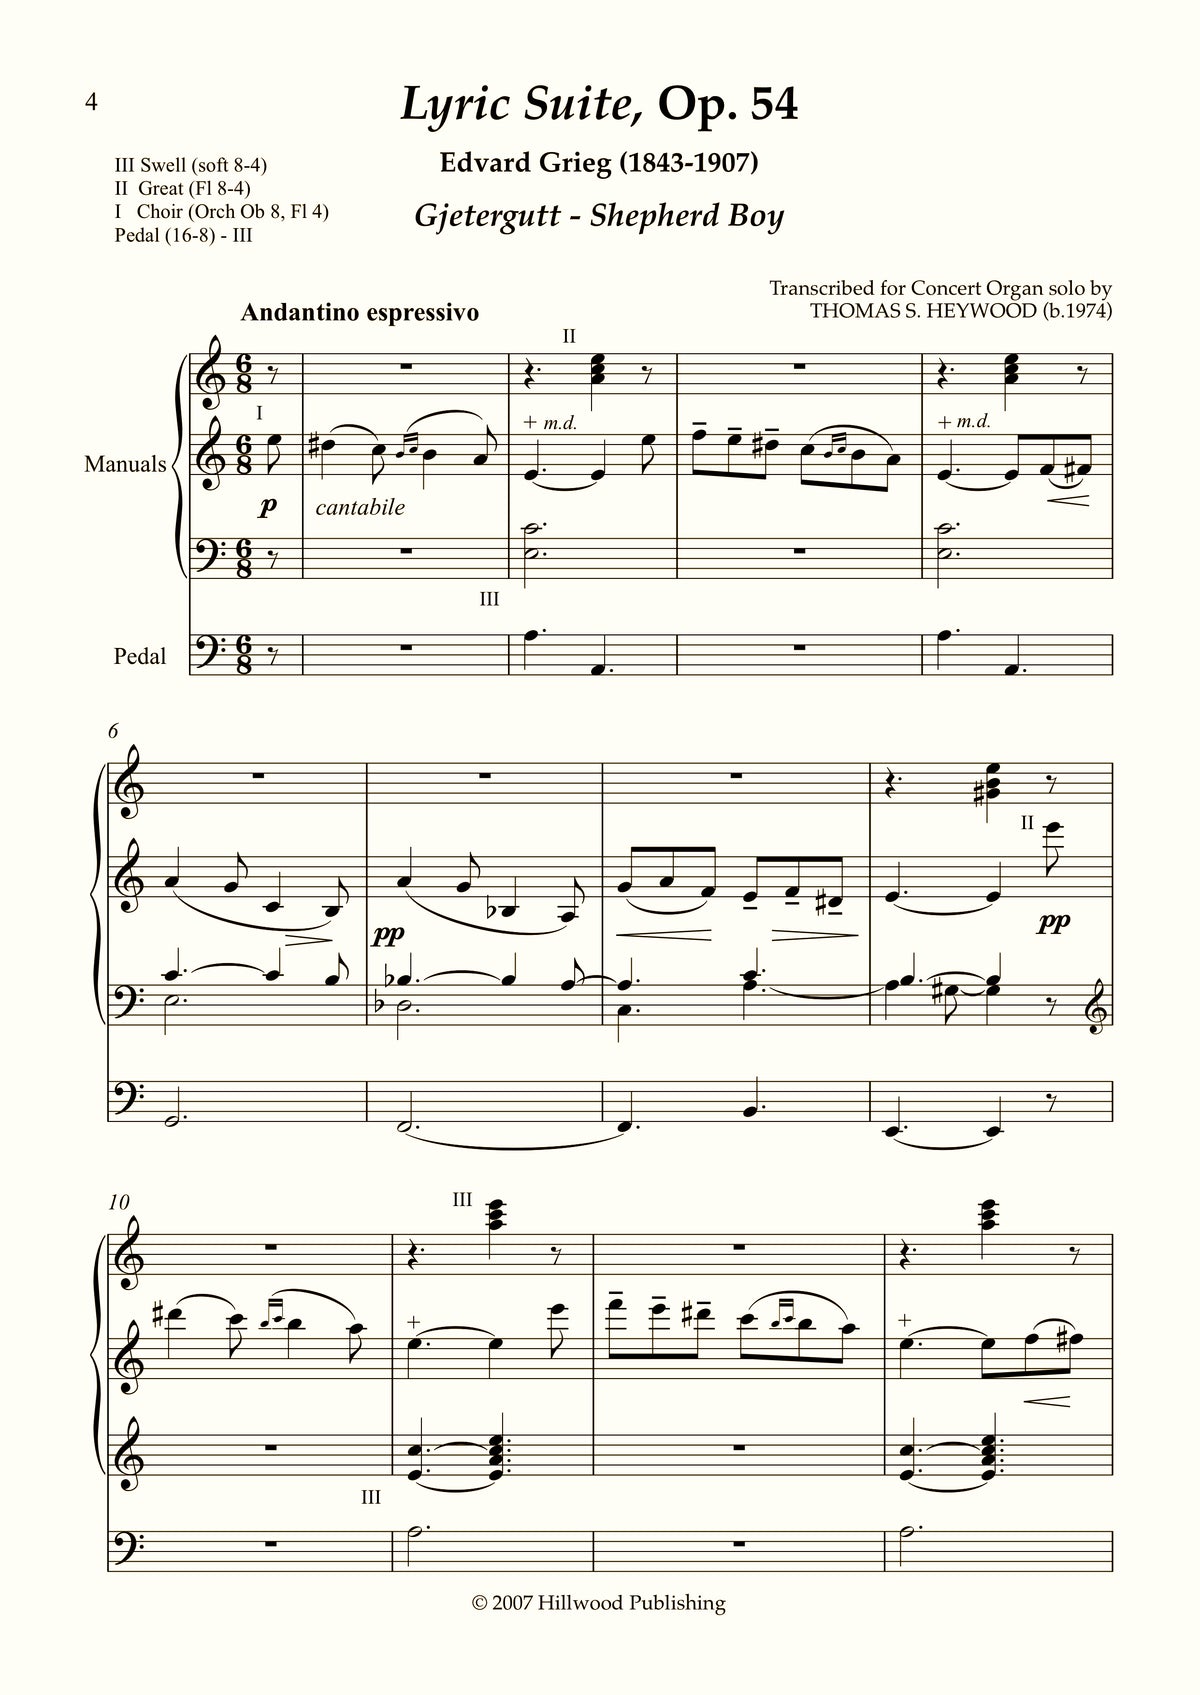 Grieg/Heywood - Shepherd Boy from the Lyric Suite, Op. 54 (Score)